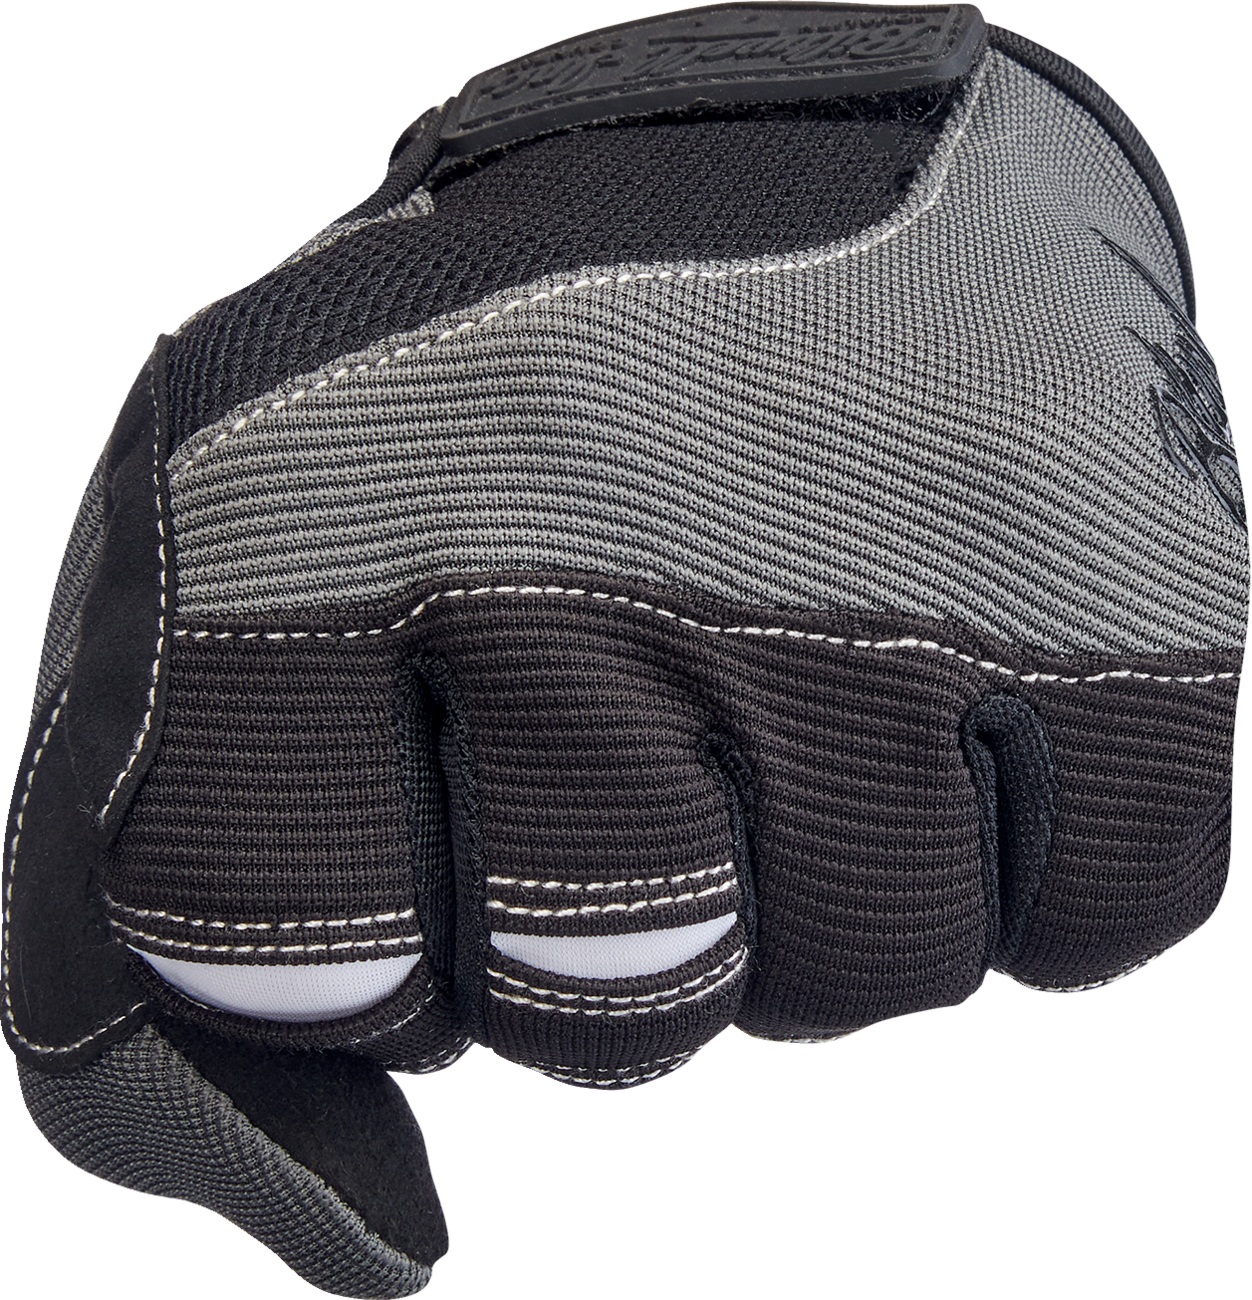 BILTWELL Moto Gloves - Gray/Black - Small 1501-1101-002